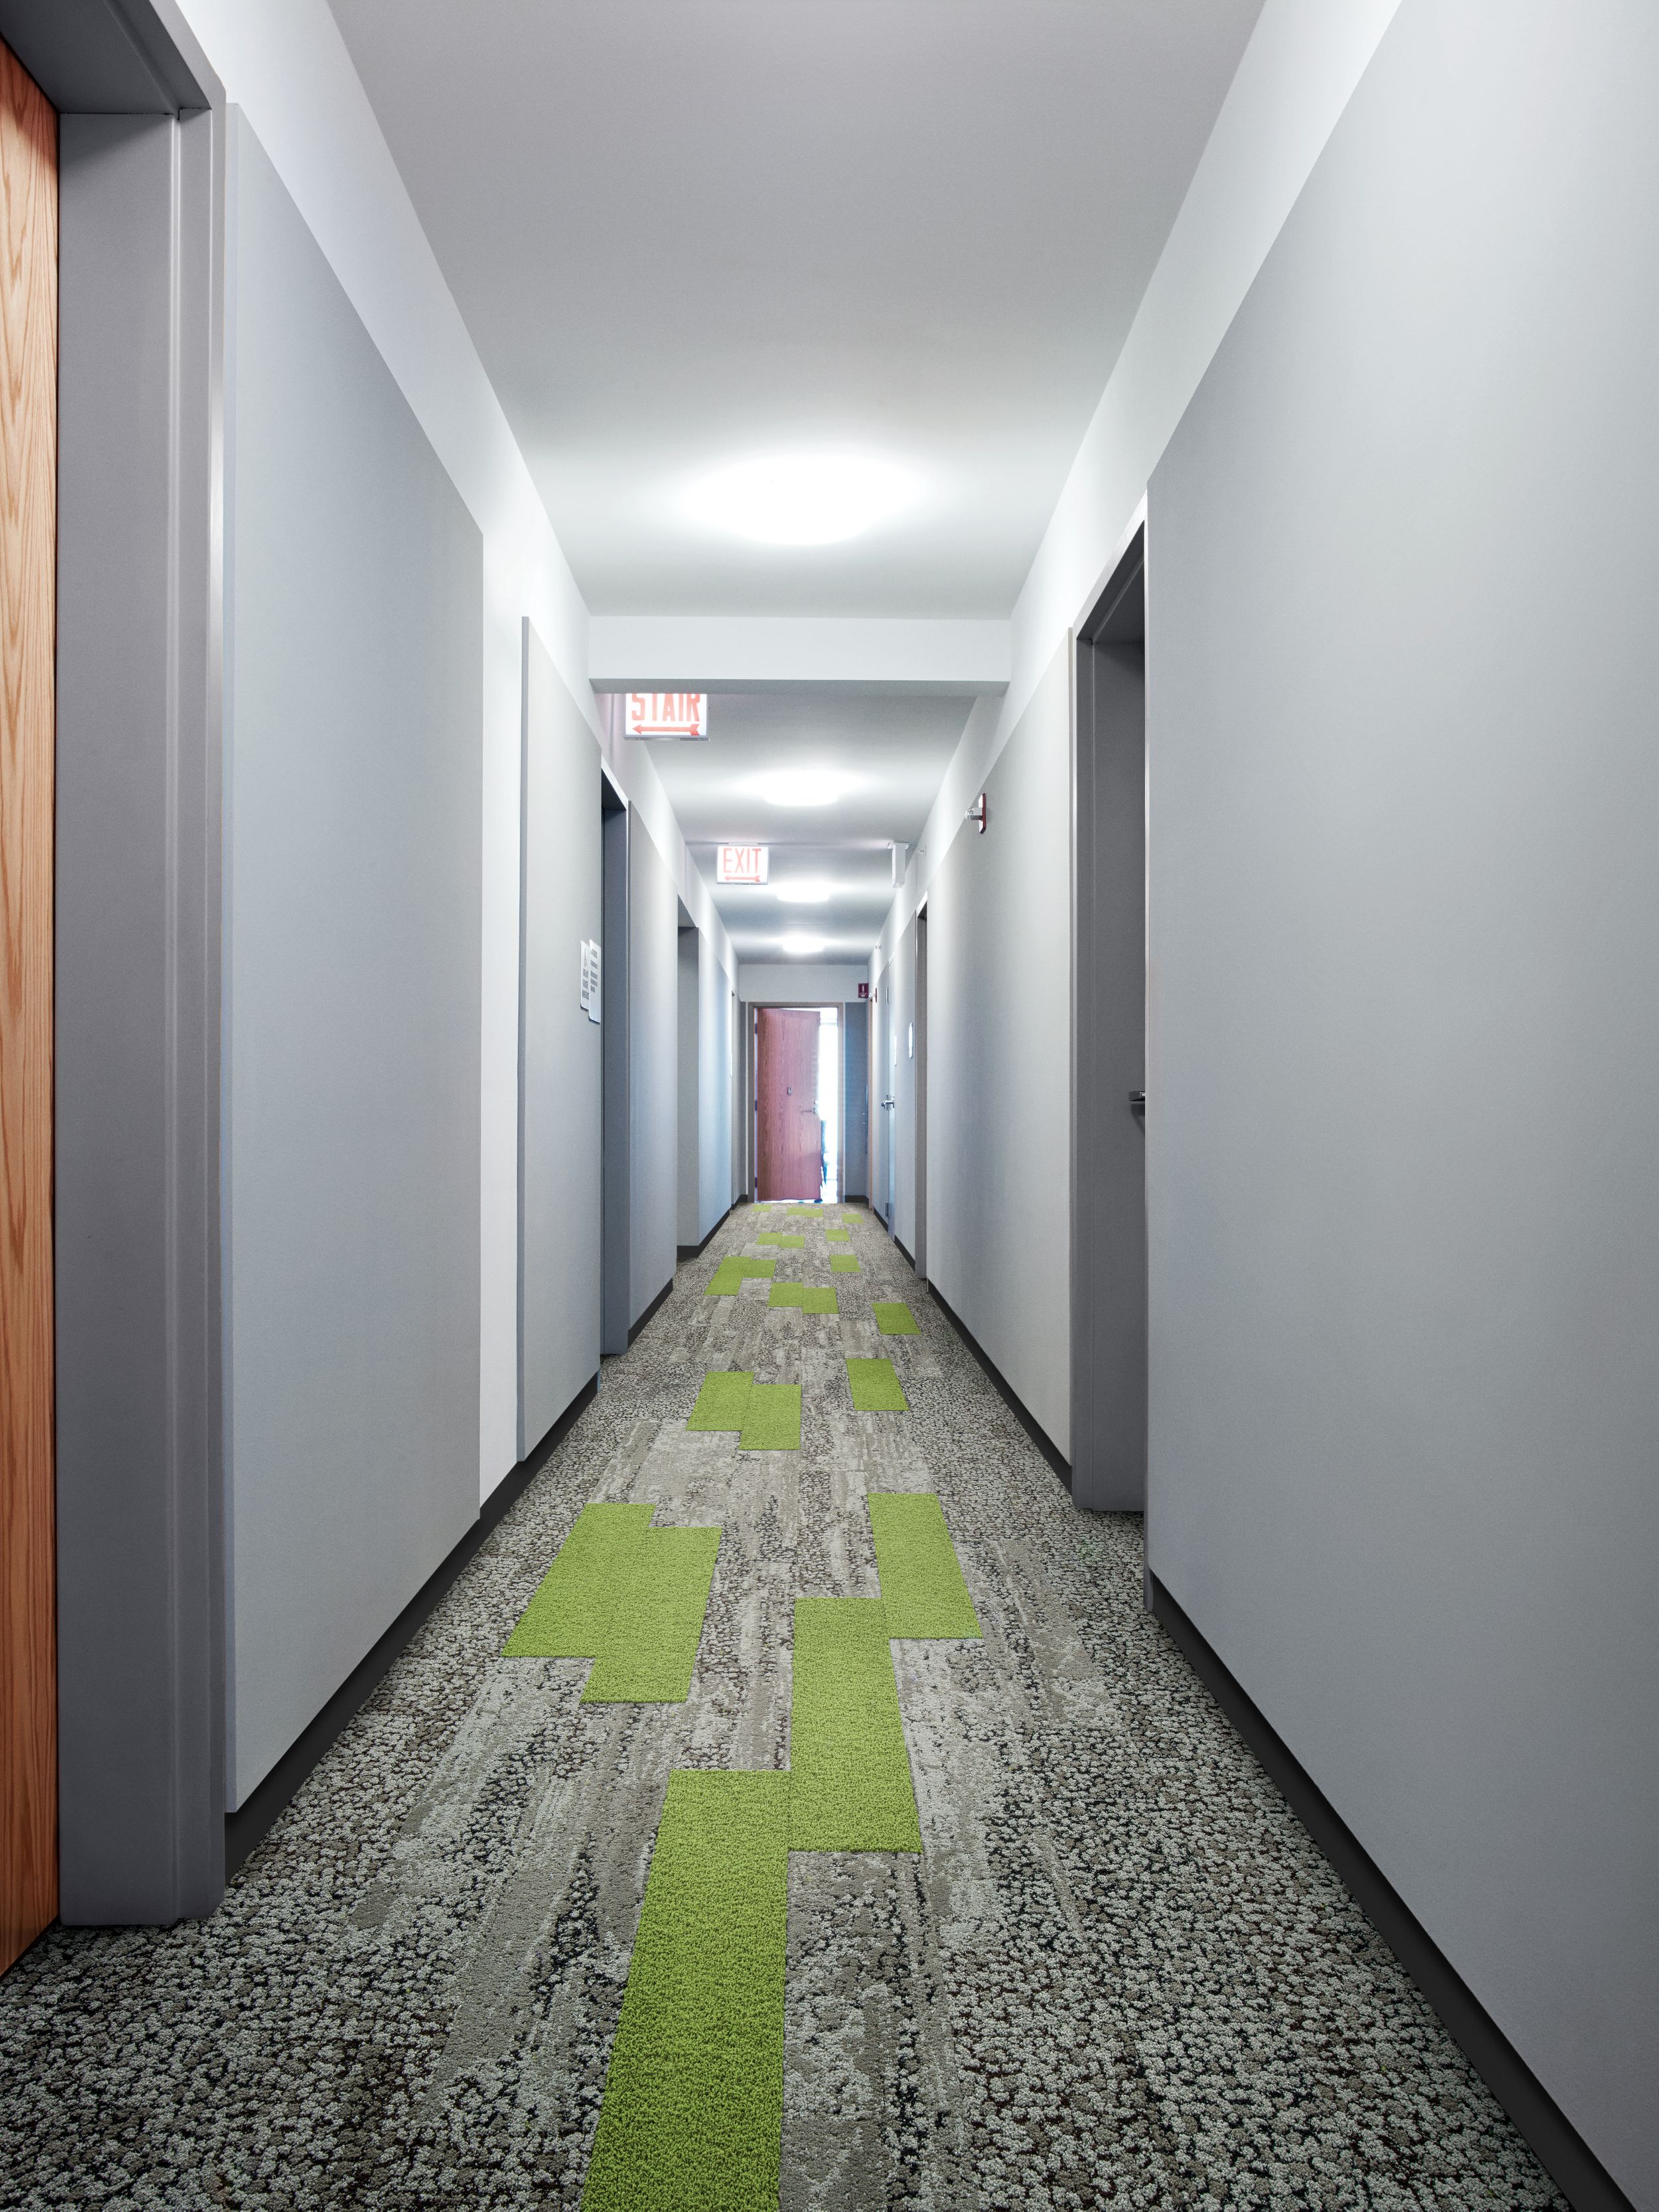 Interface HN830 and HN850 plank carpet tiles in long corridor with mutliple doors and wood door at end imagen número 2